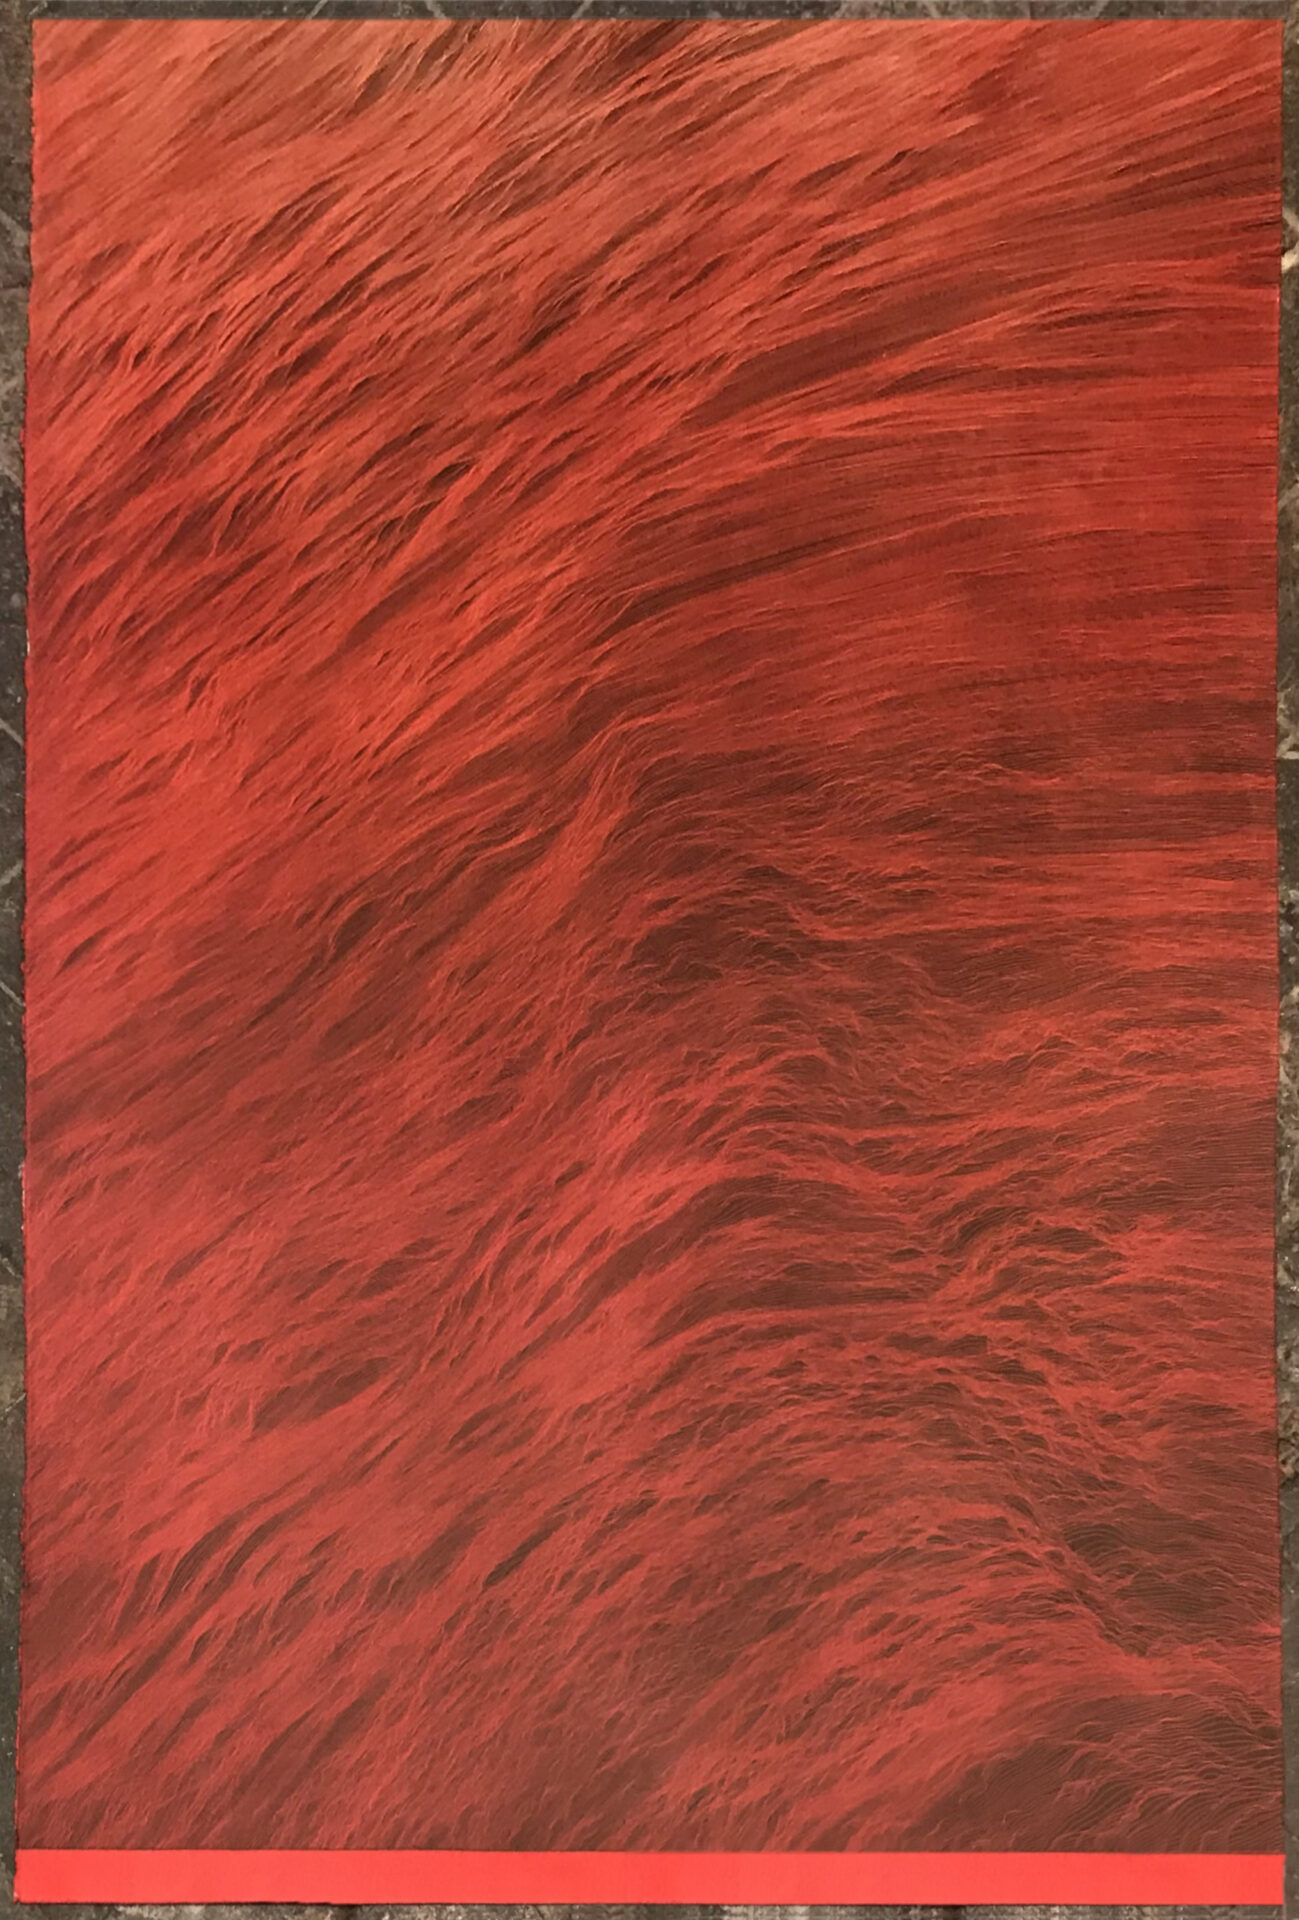 JE Red Wave 2 2022 Ed.4.12 153x100 cm Etching on Hahnemuhle 350 gr paper copia copia Pigment Gallery Galería de Arte en Barcelona Red Wave II